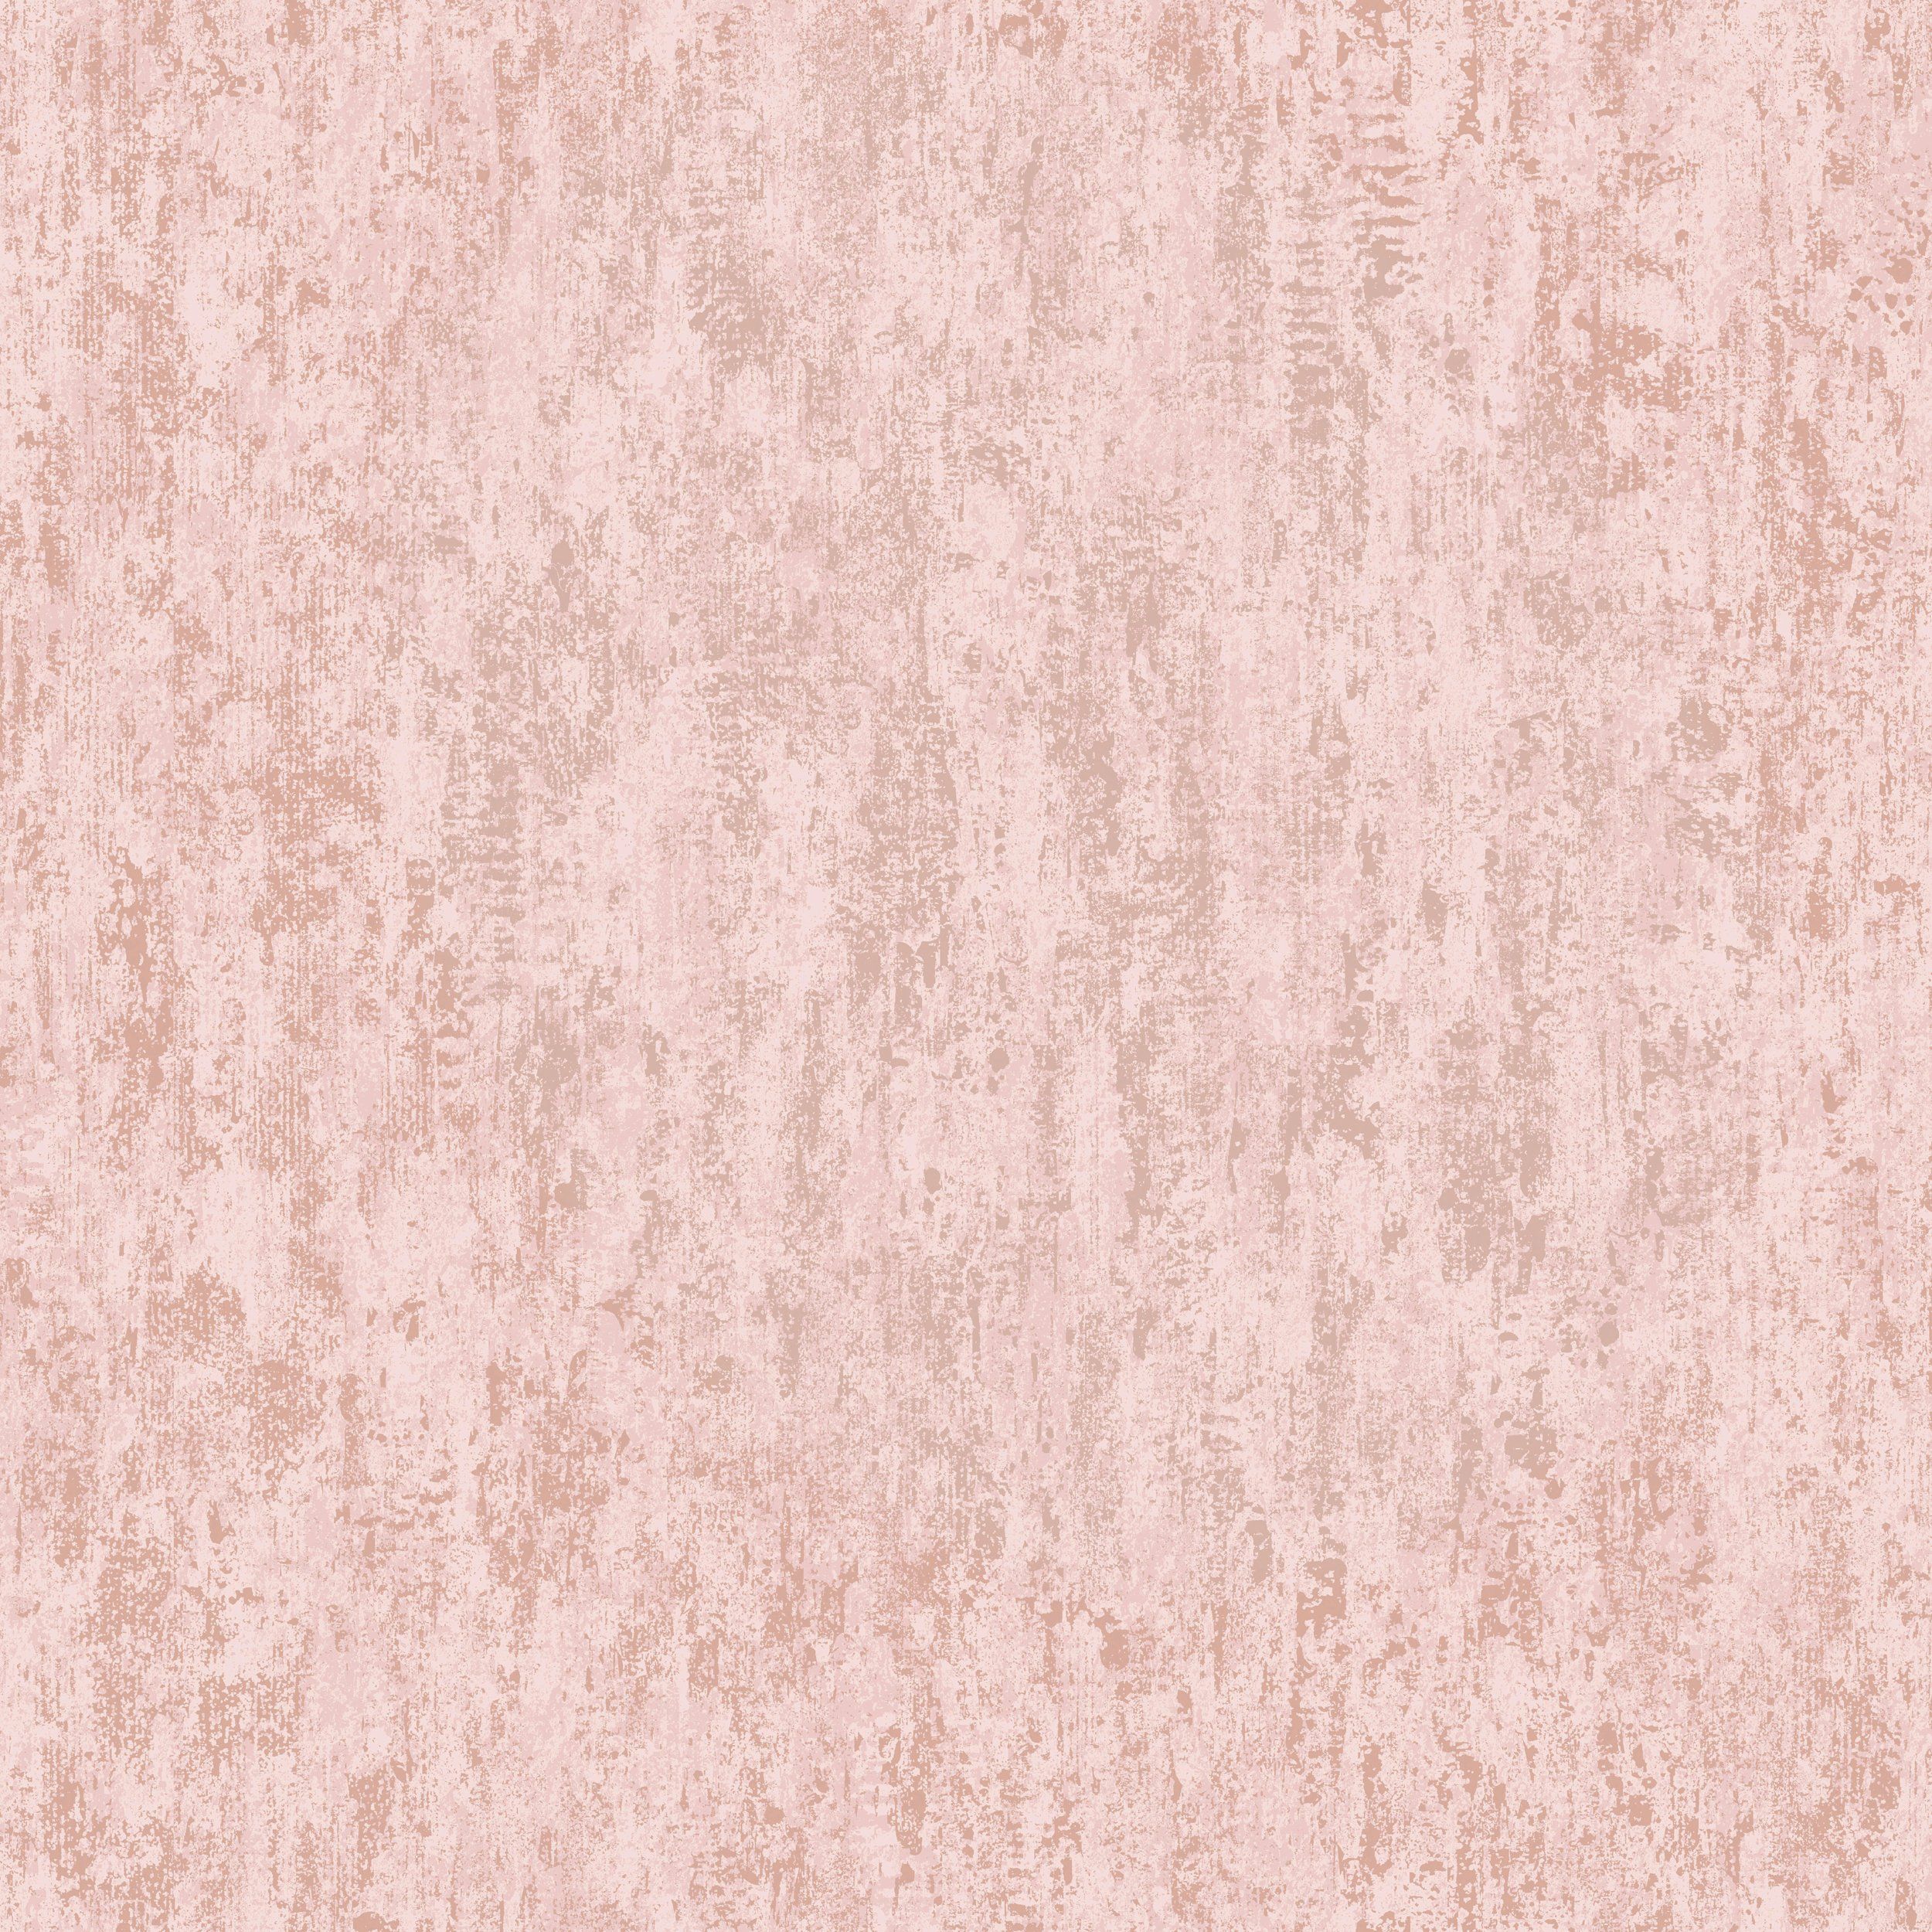 Blush Pink Textured Wallpaper